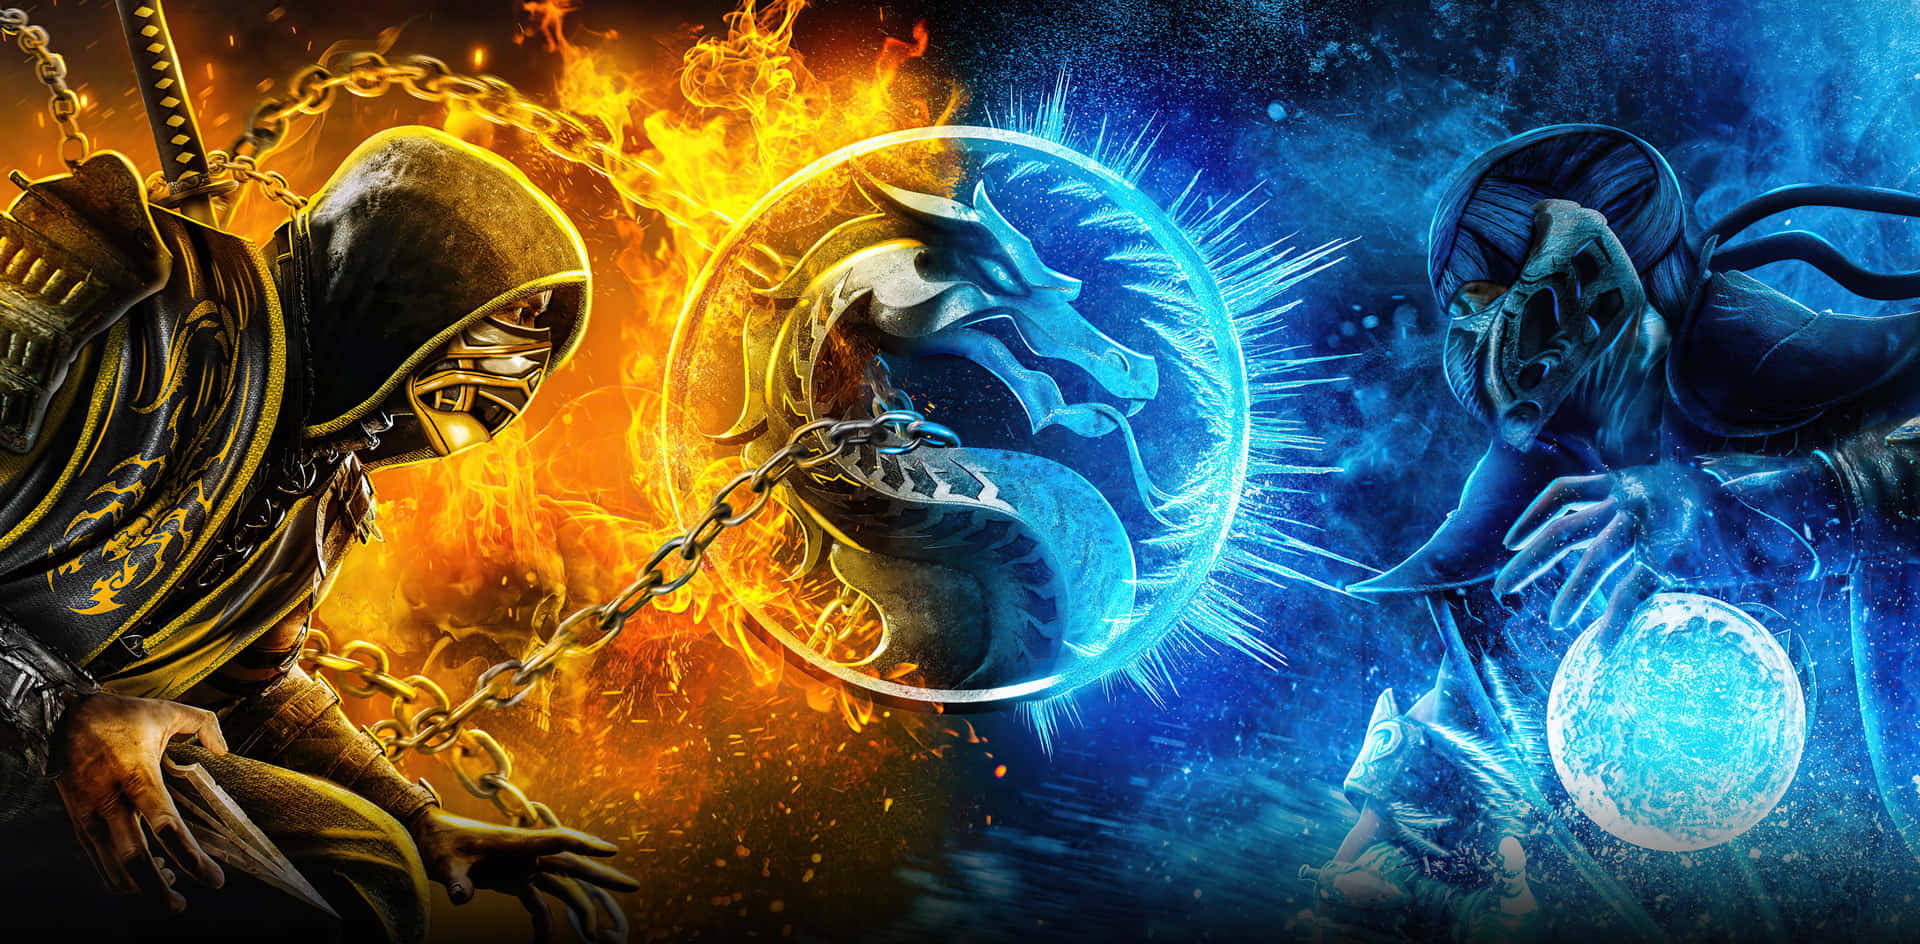 Join the fight in Mortal Kombat 2021! Wallpaper